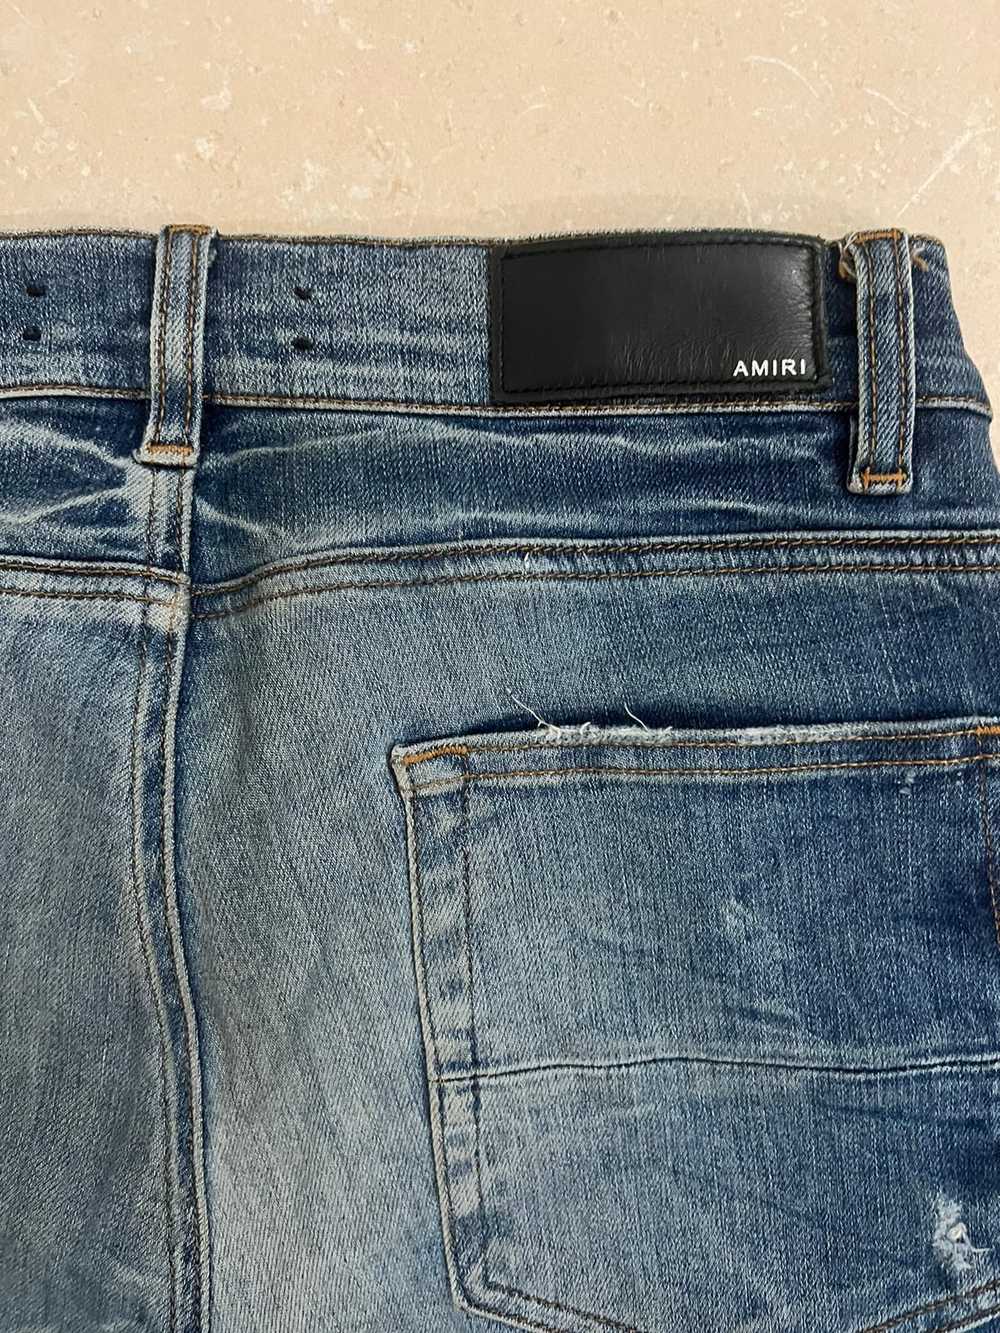 Amiri Amiri Mx1 leather Patch jeans - image 11